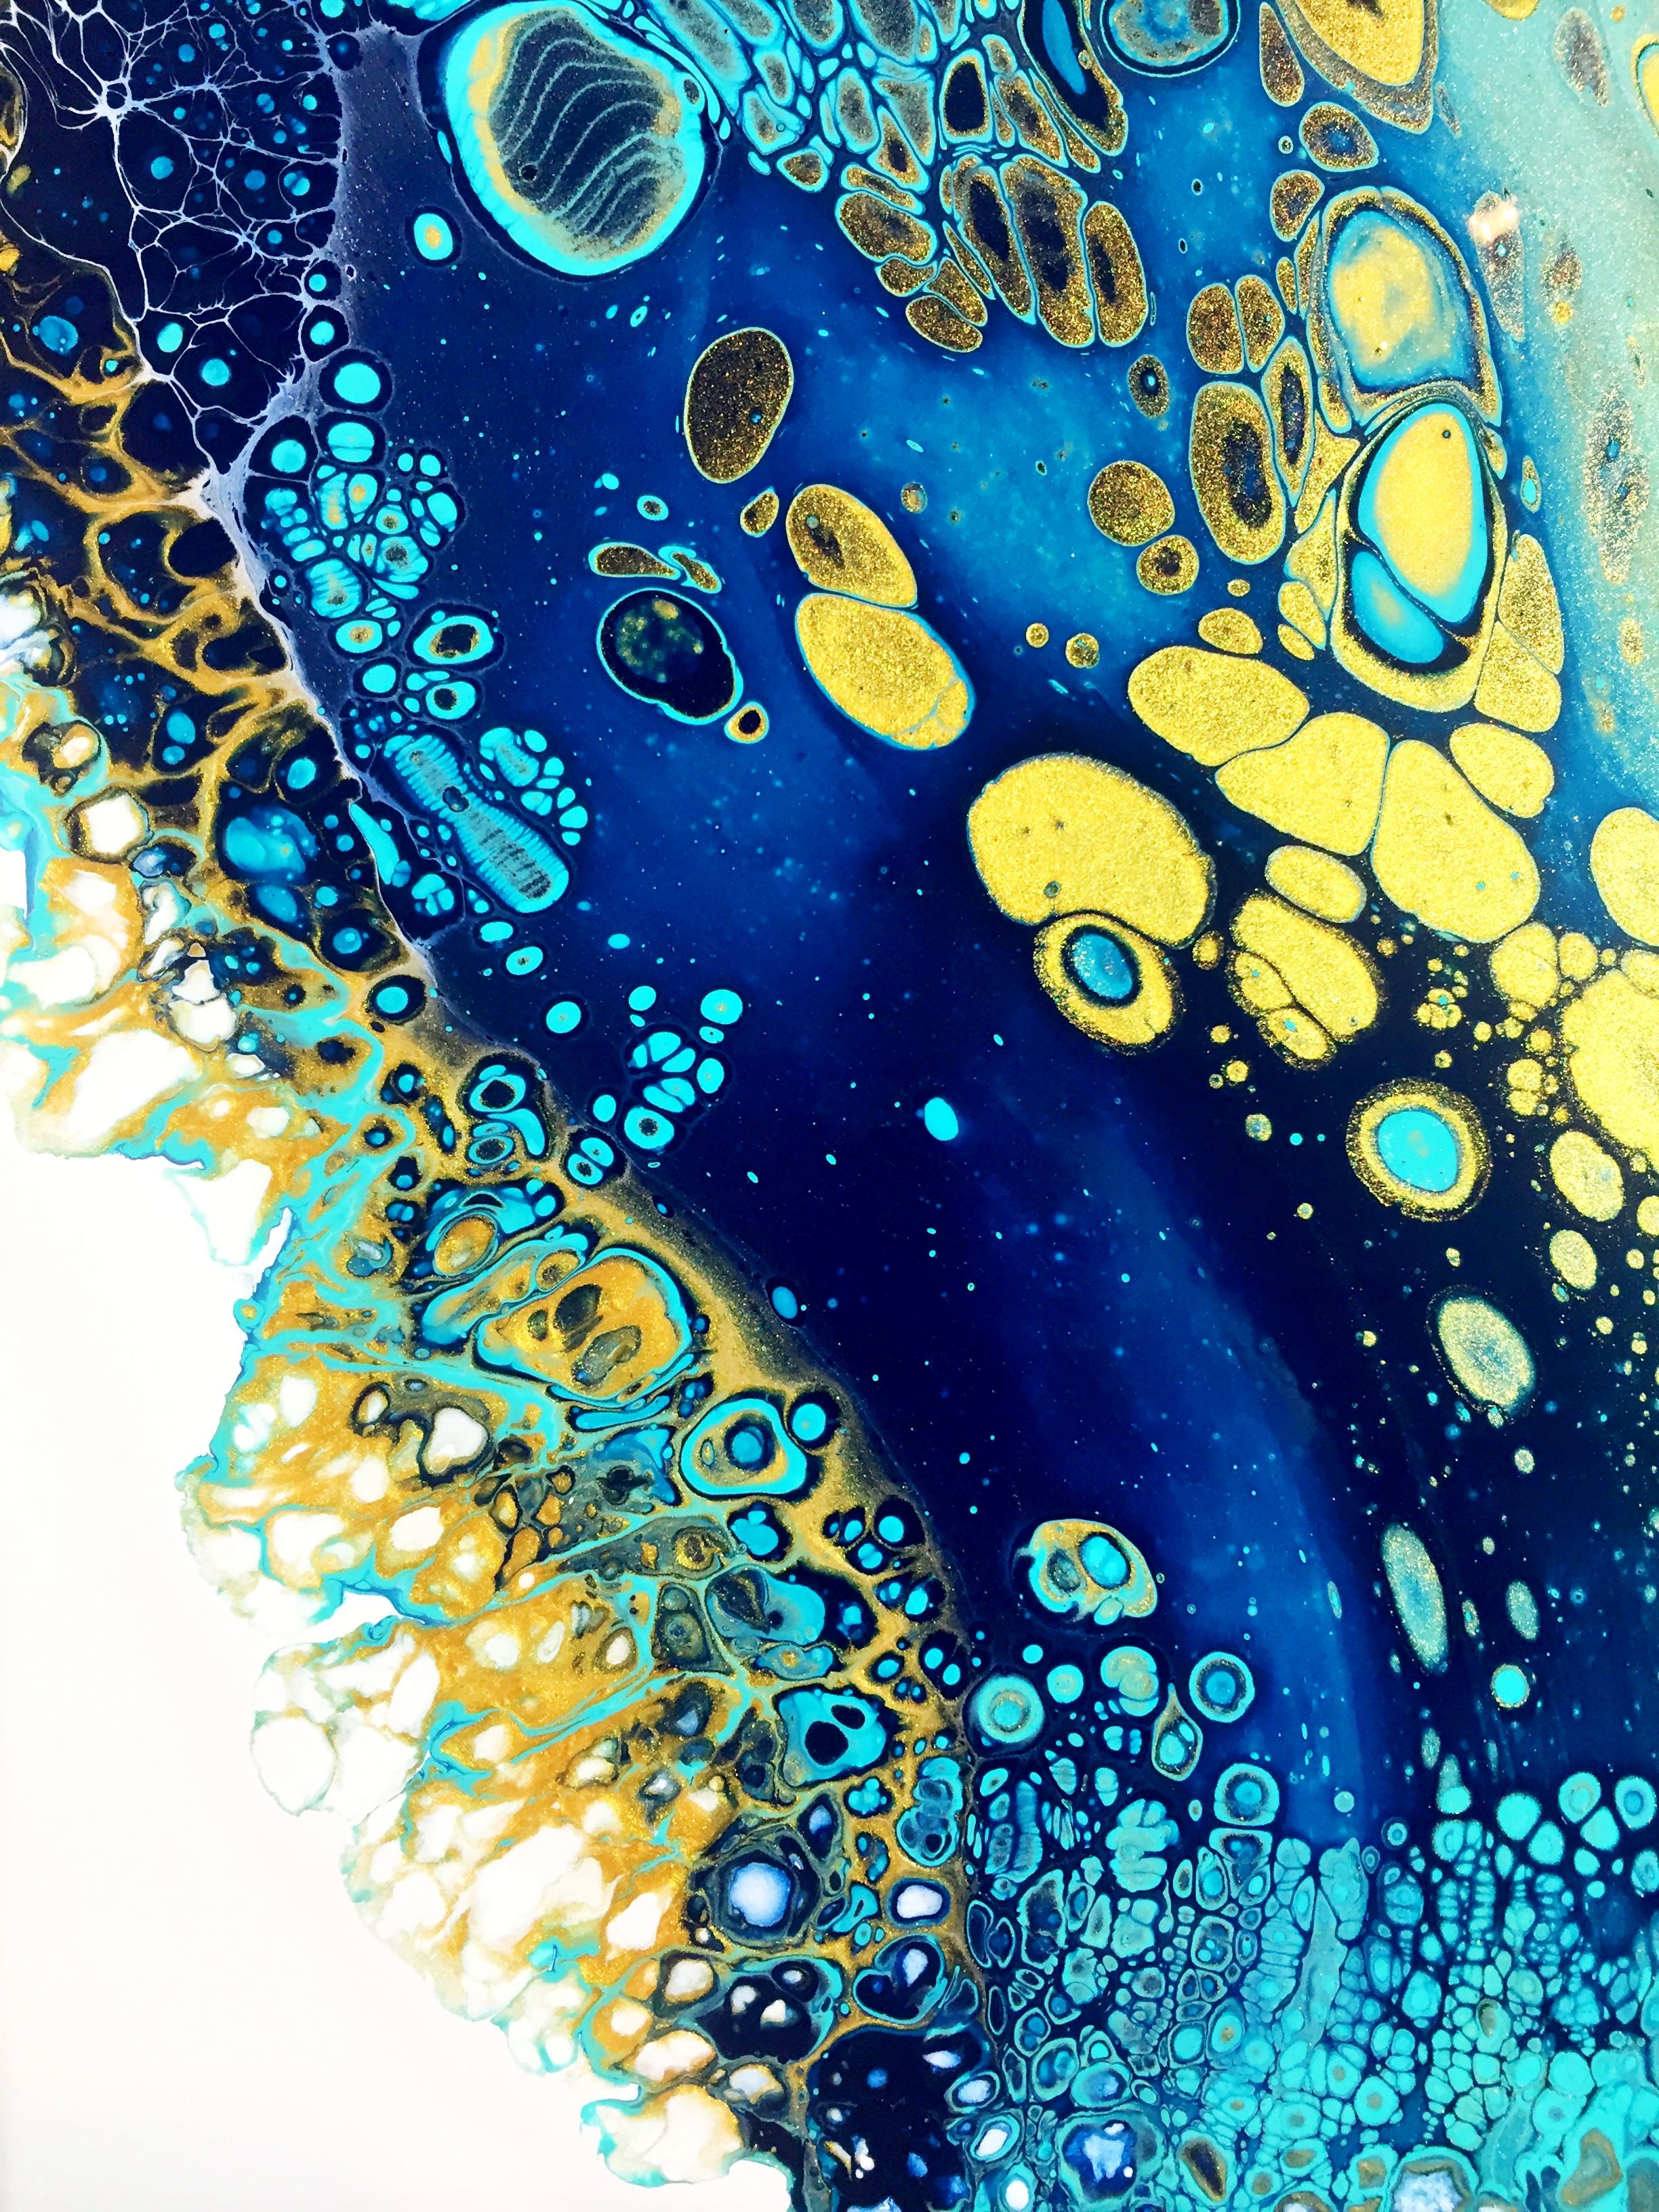 Fluid abstract | 医疗 | Pinterest | Acrylics, Paintings and Resin art